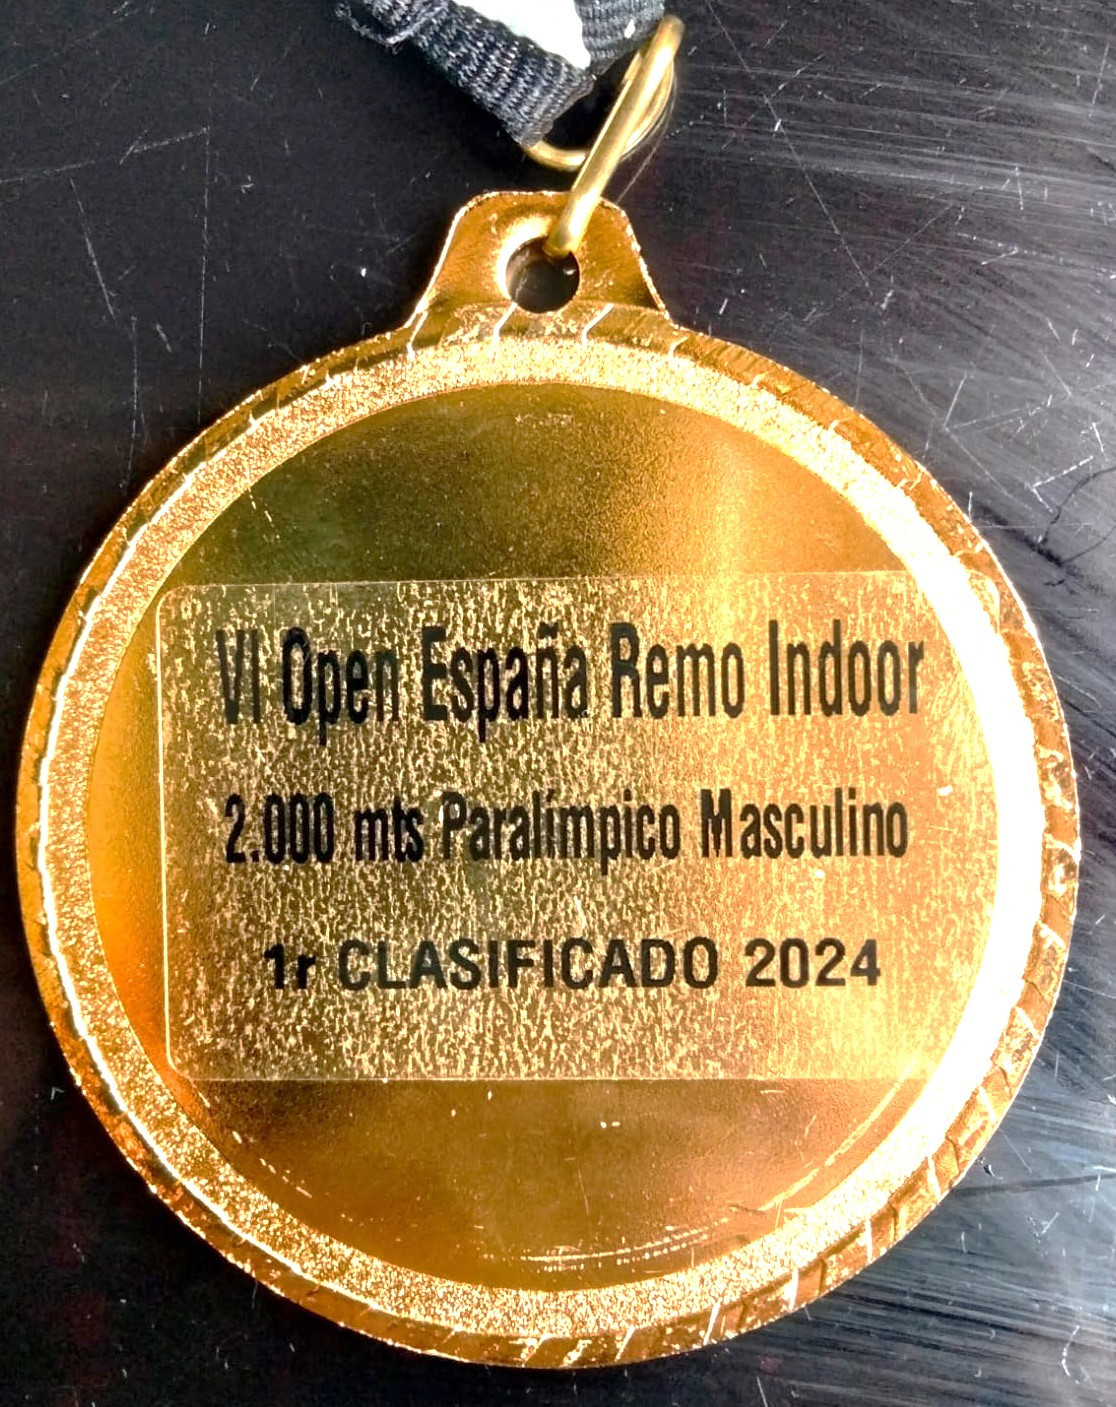 Reverso medalla Open Remo Indoor